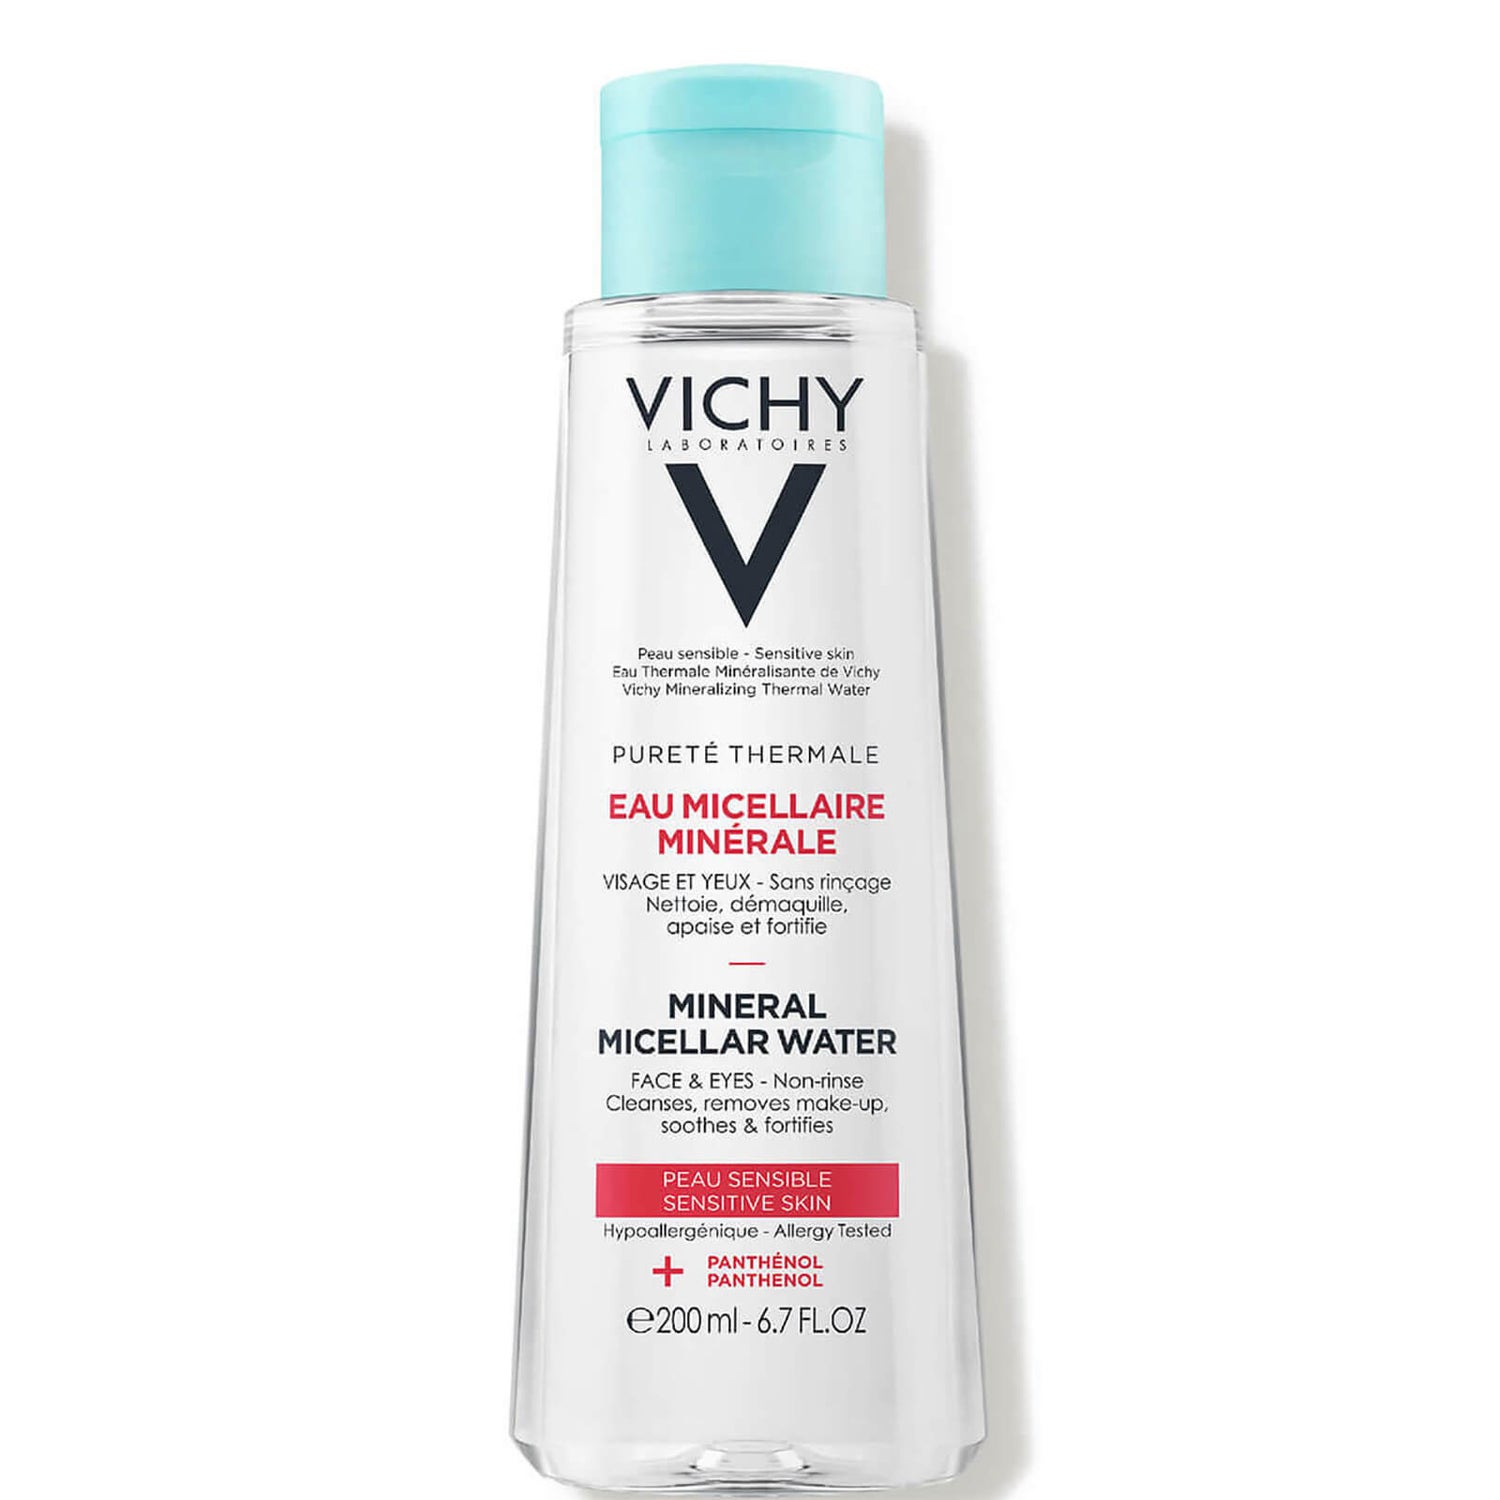 Vichy Purete Thermale Mineral Micellar Water for Sensitive Skin (6.7 fl. oz.)